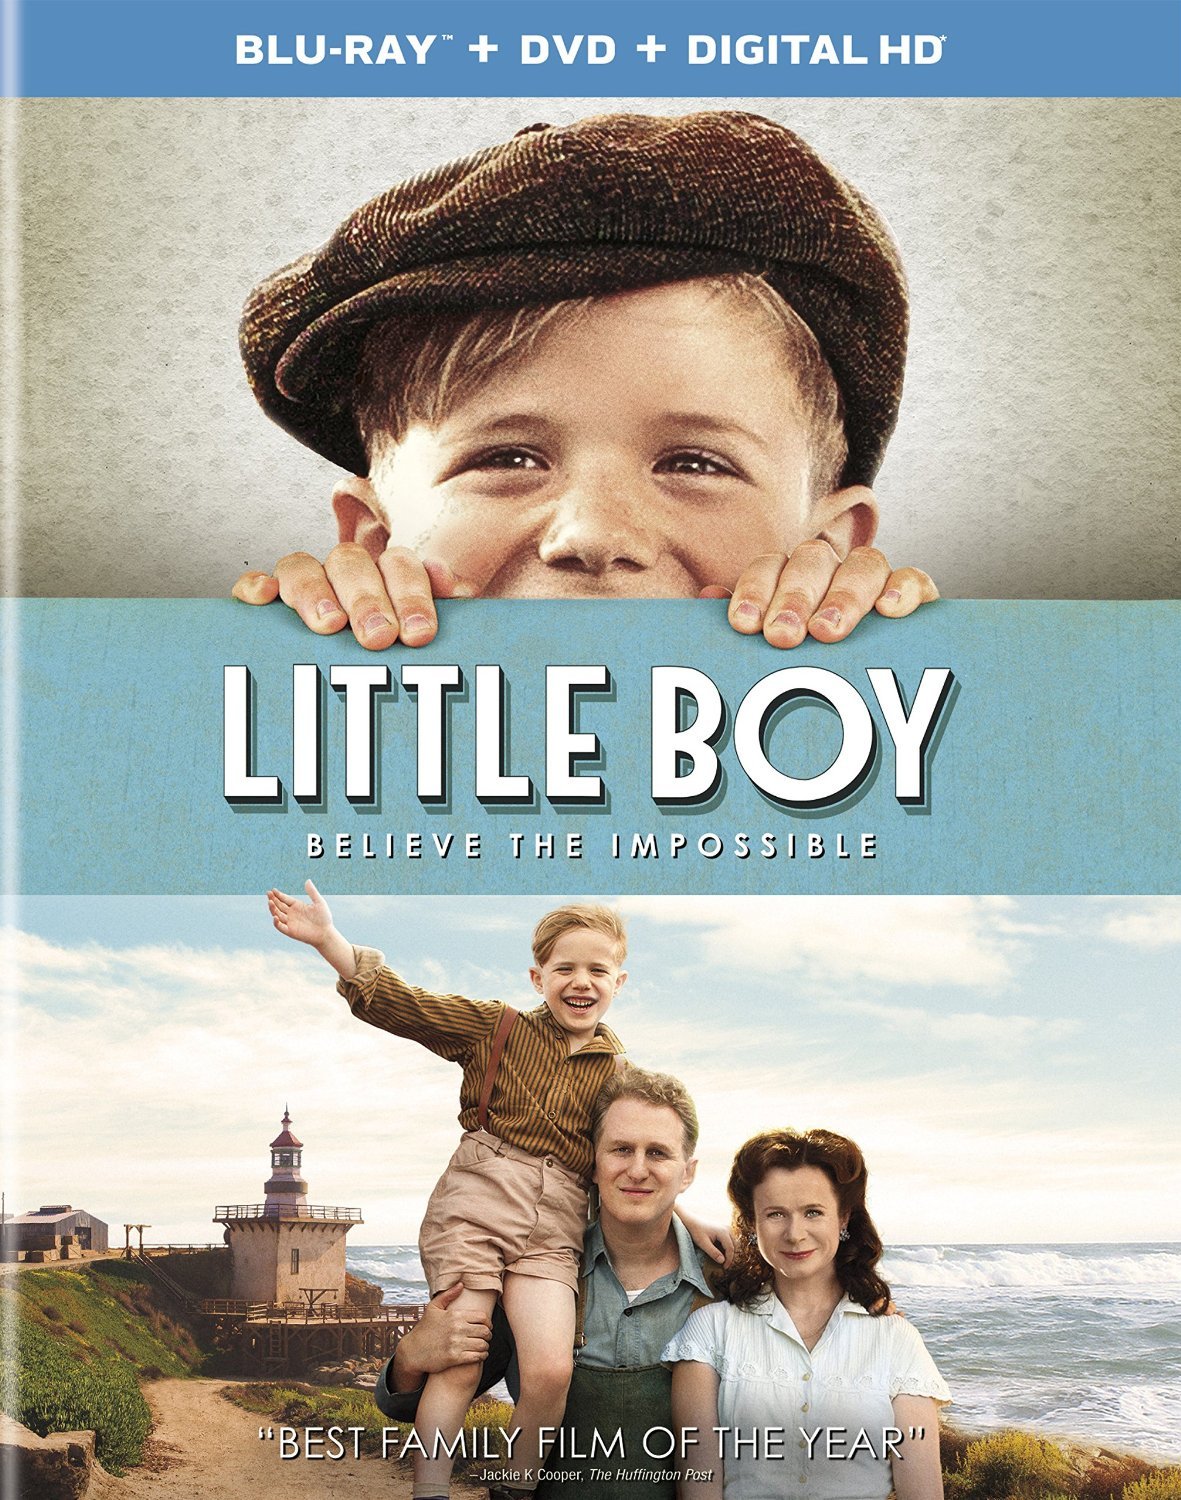 Little Boy Blu-ray Review